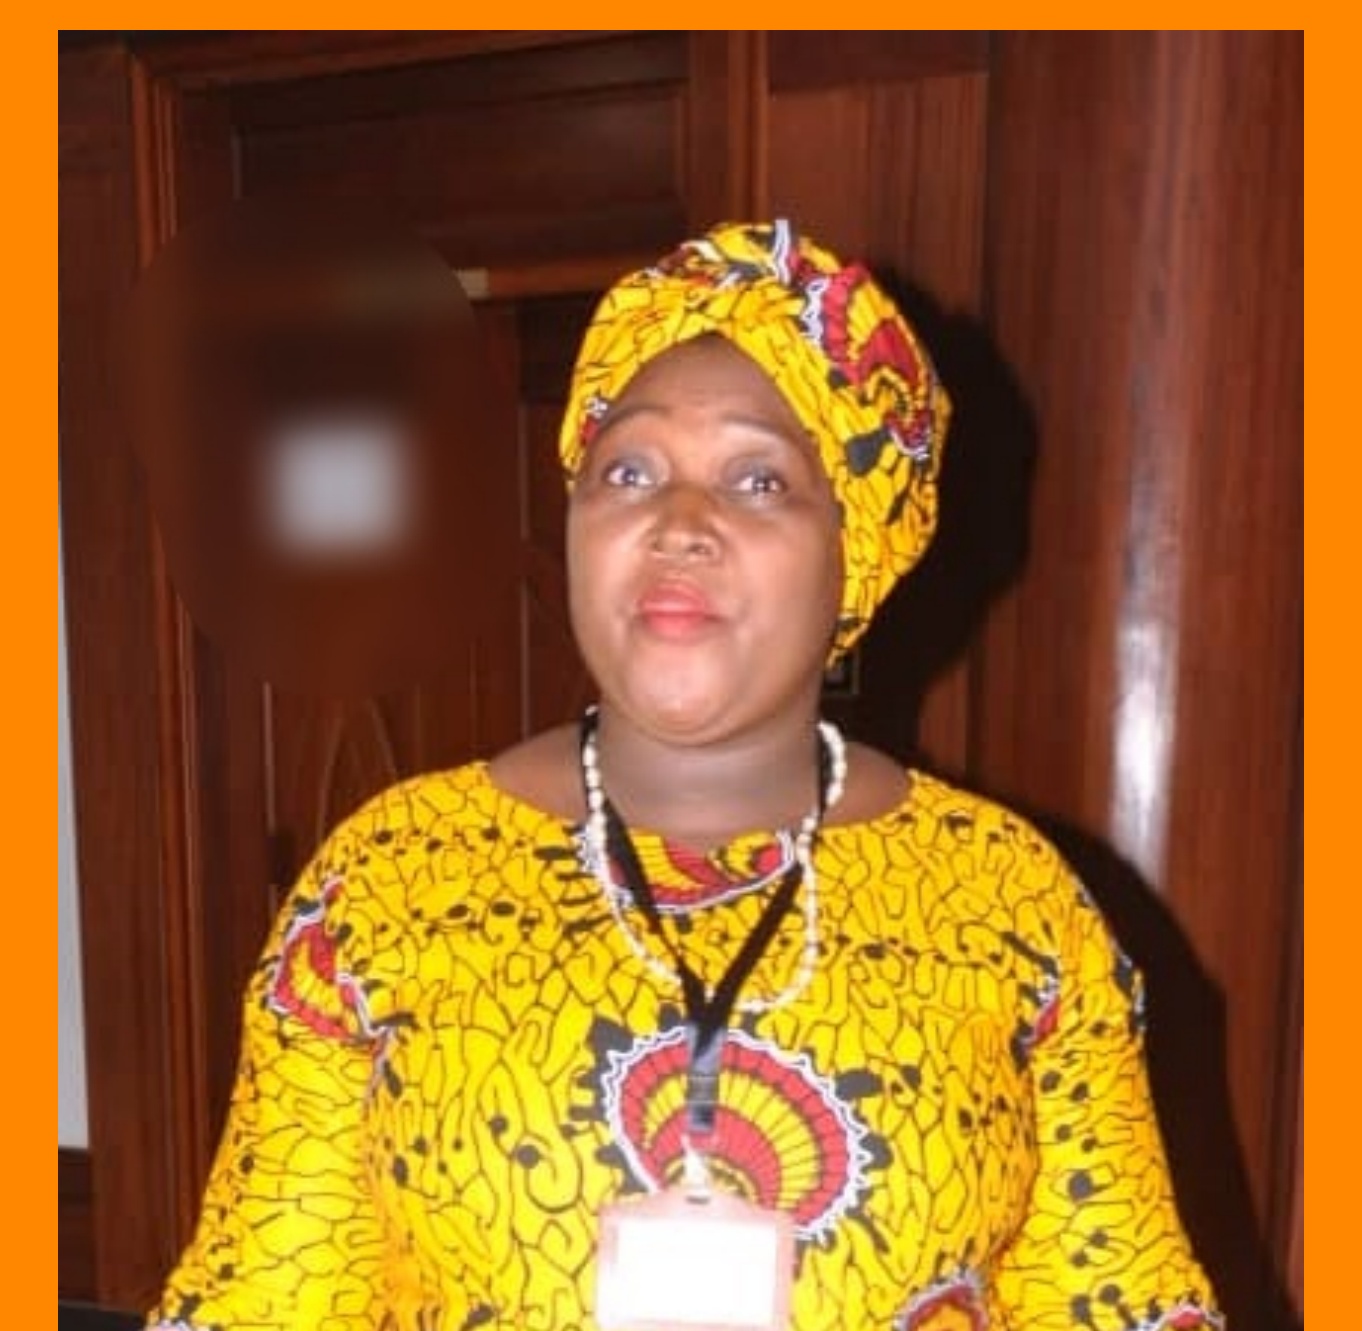 Ms. Ntombikayise Fakudze